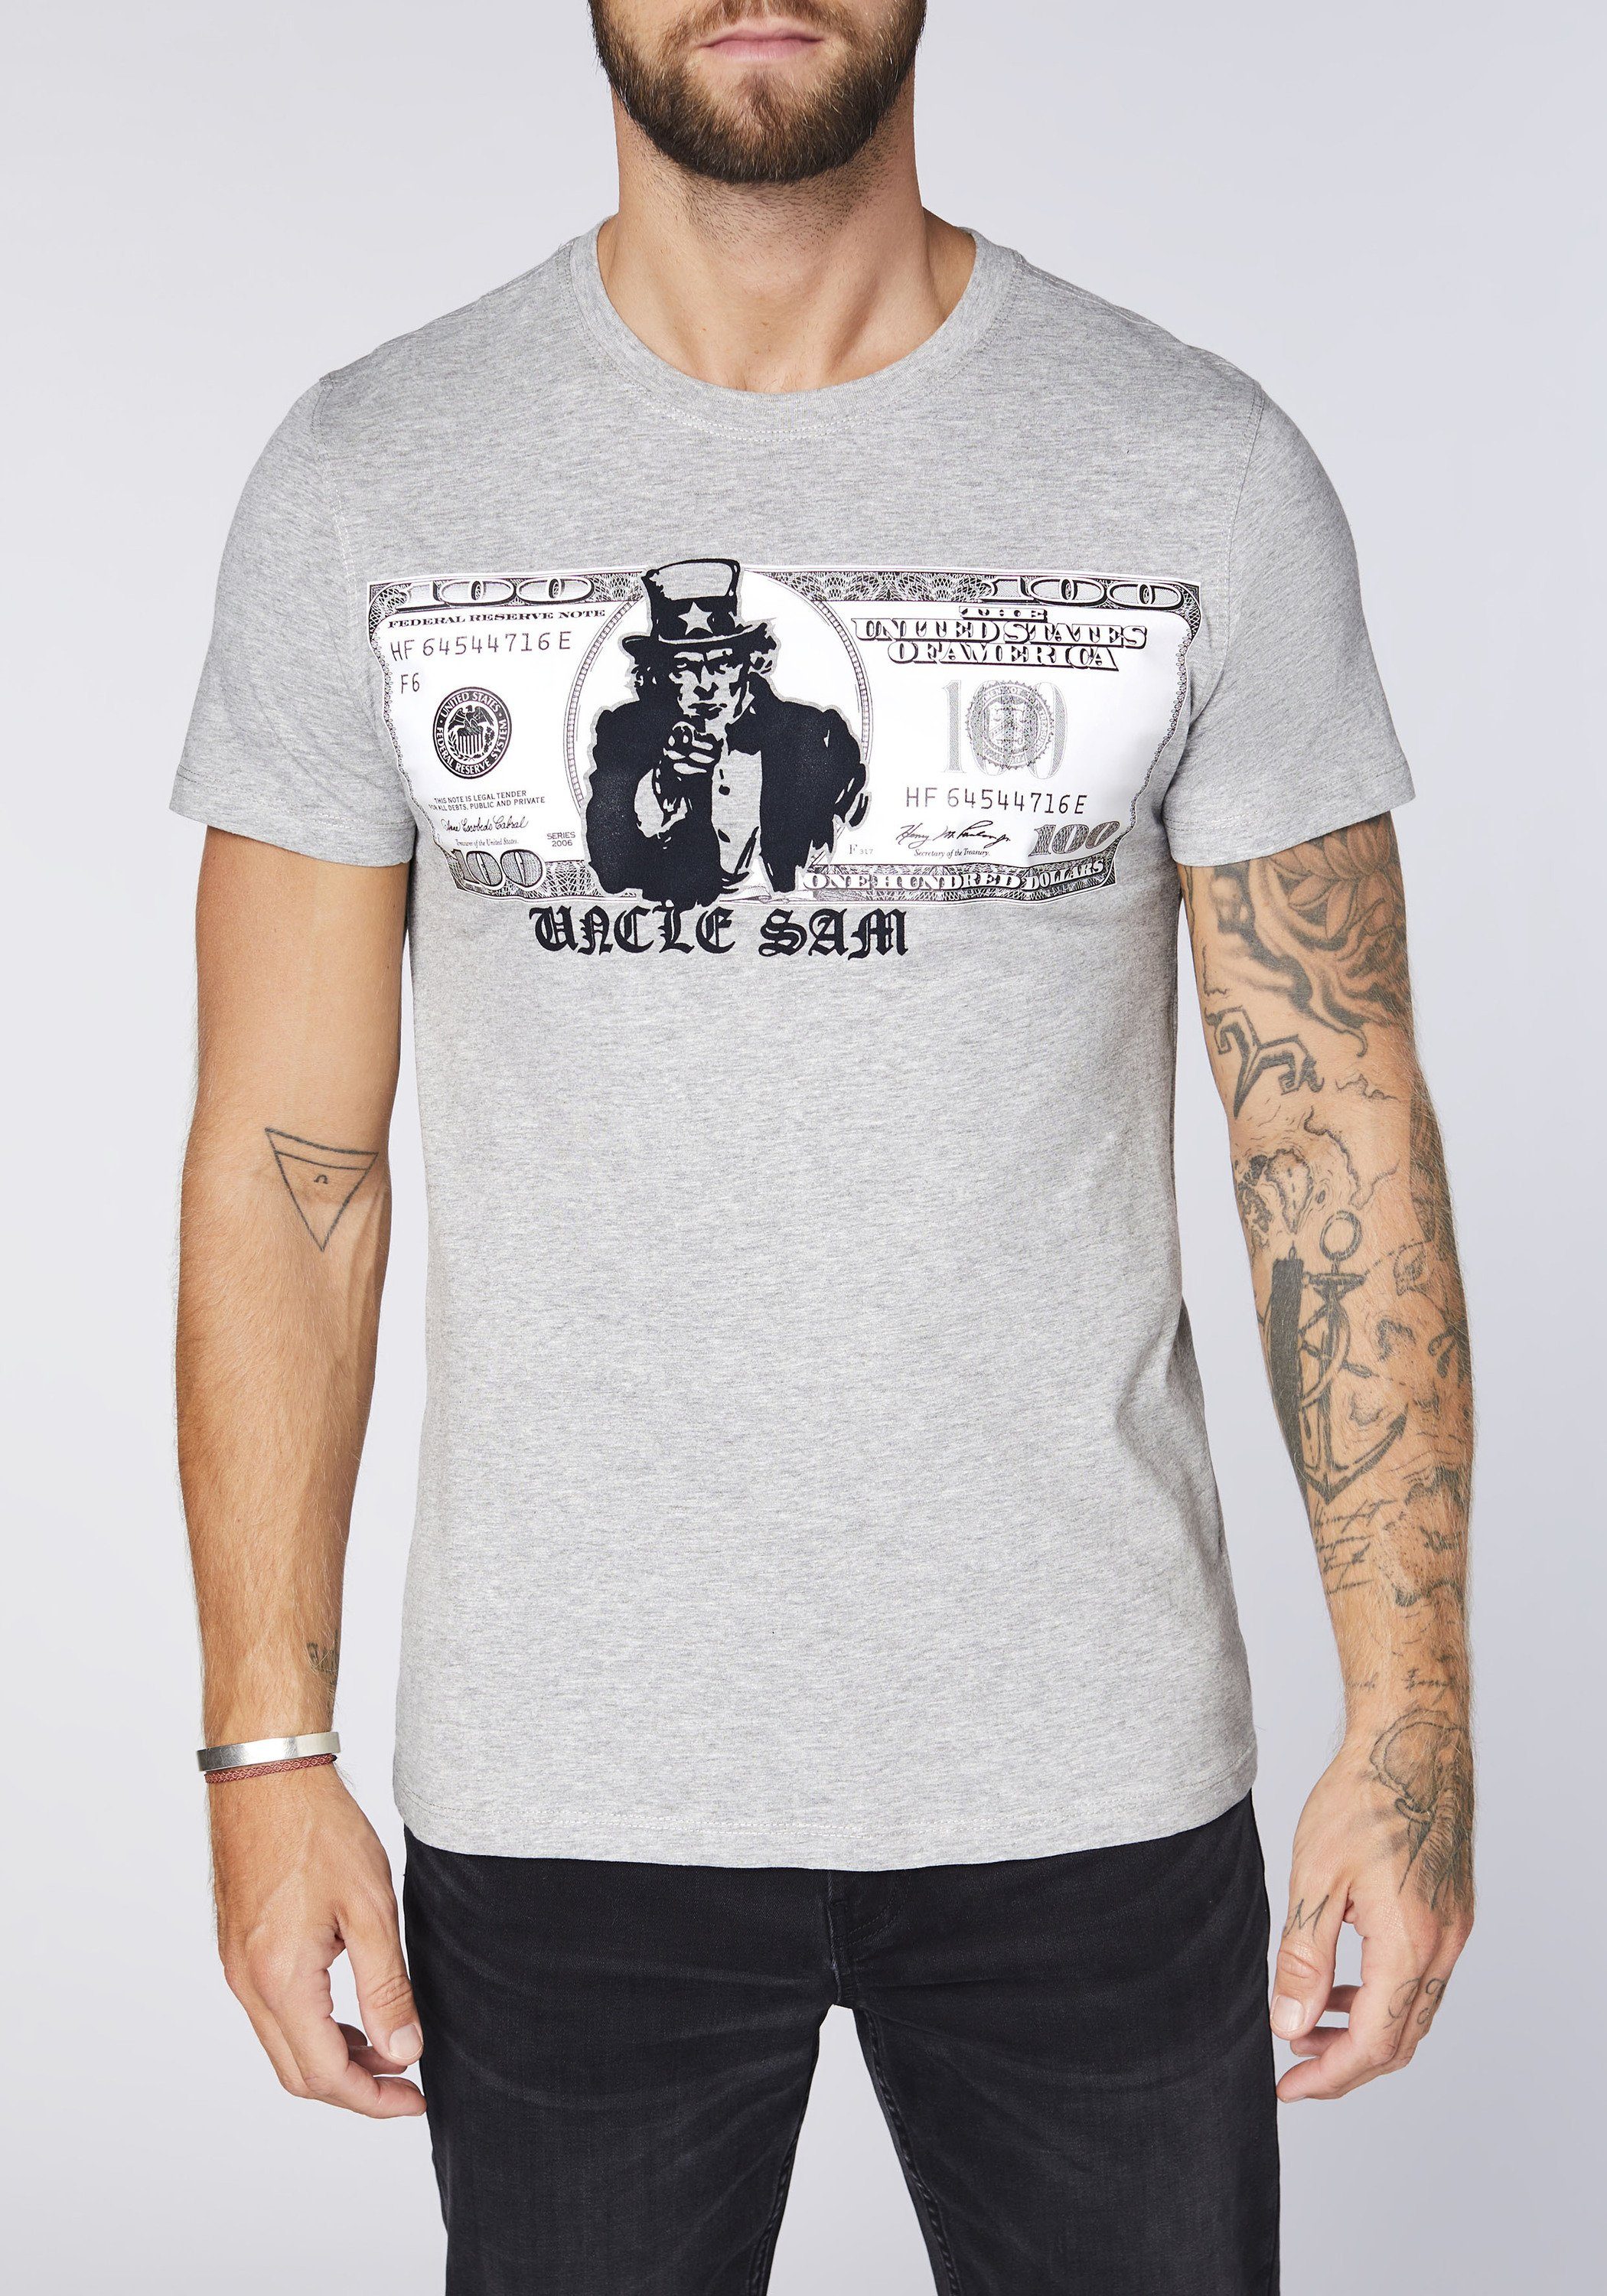 Uncle Sam Print-Shirt mit Frontprint Gray Neutral Melange 17-4402M